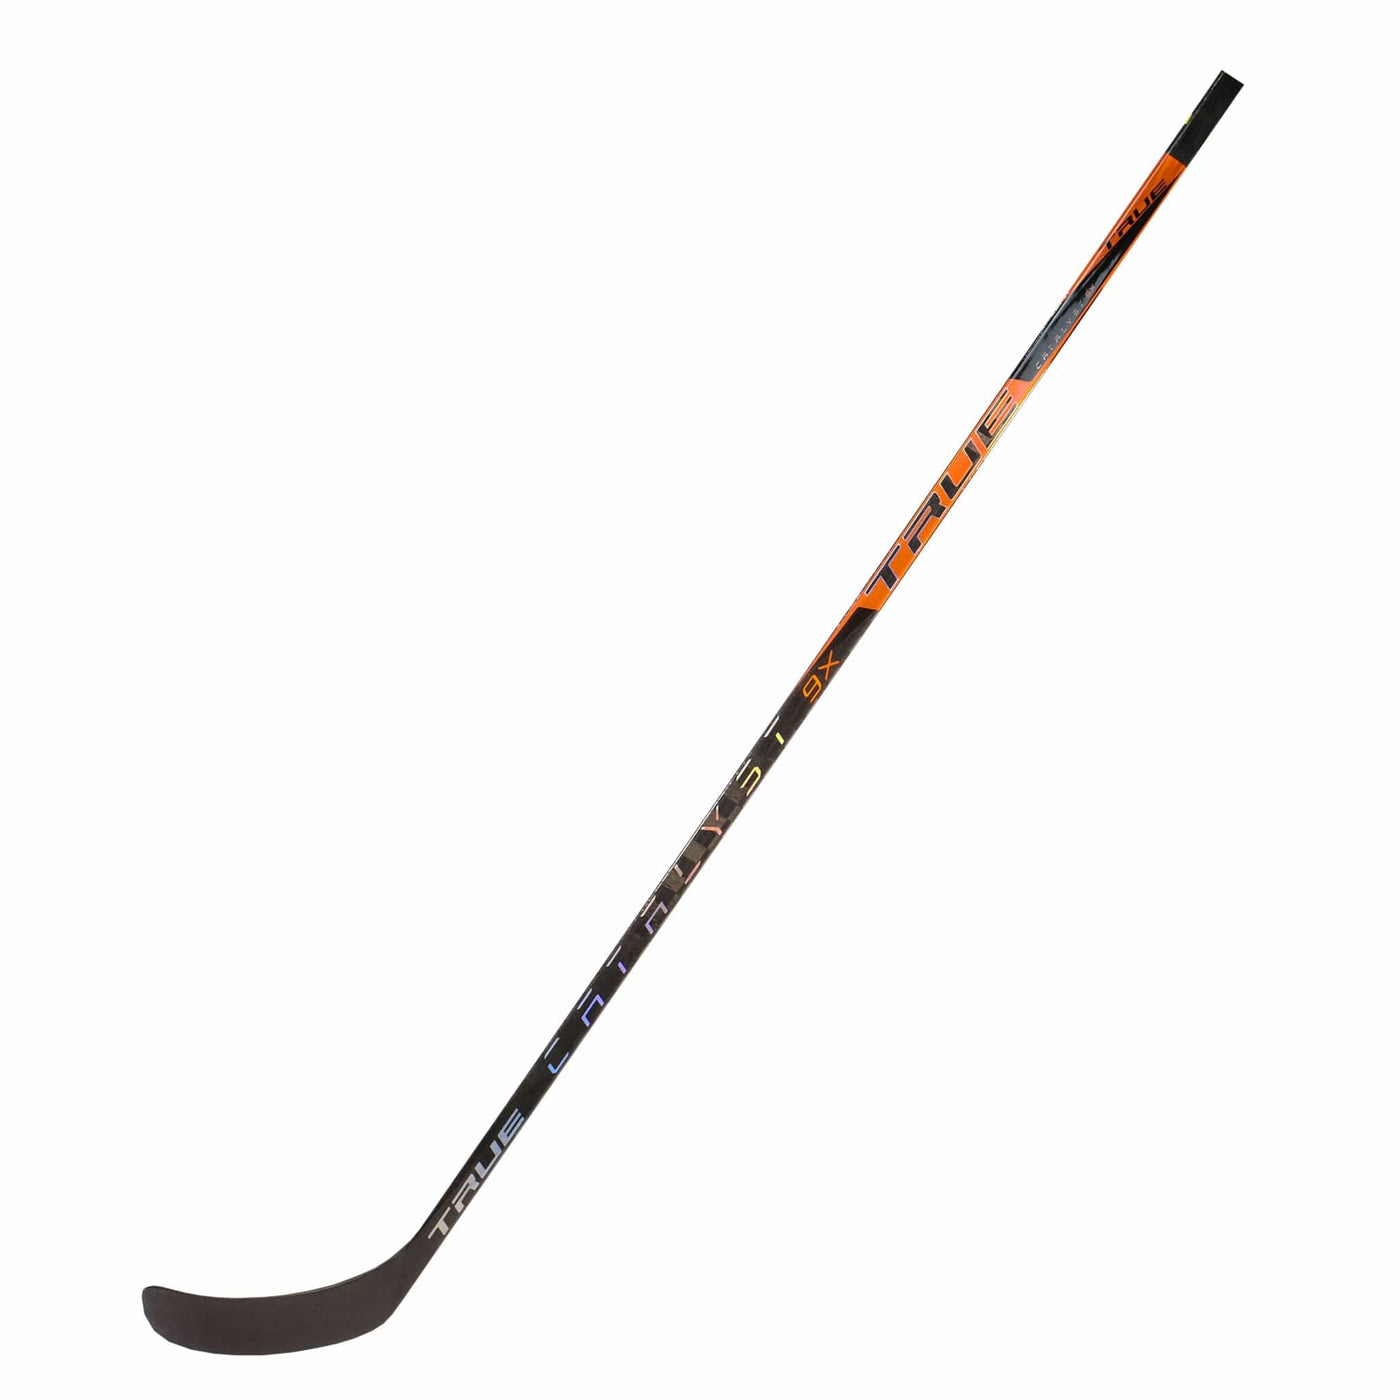 TRUE Catalyst 9X Pro Stock Senior Hockey Stick - James Van Riemsdyk - TC2 - L-100 - The Hockey Shop Source For Sports